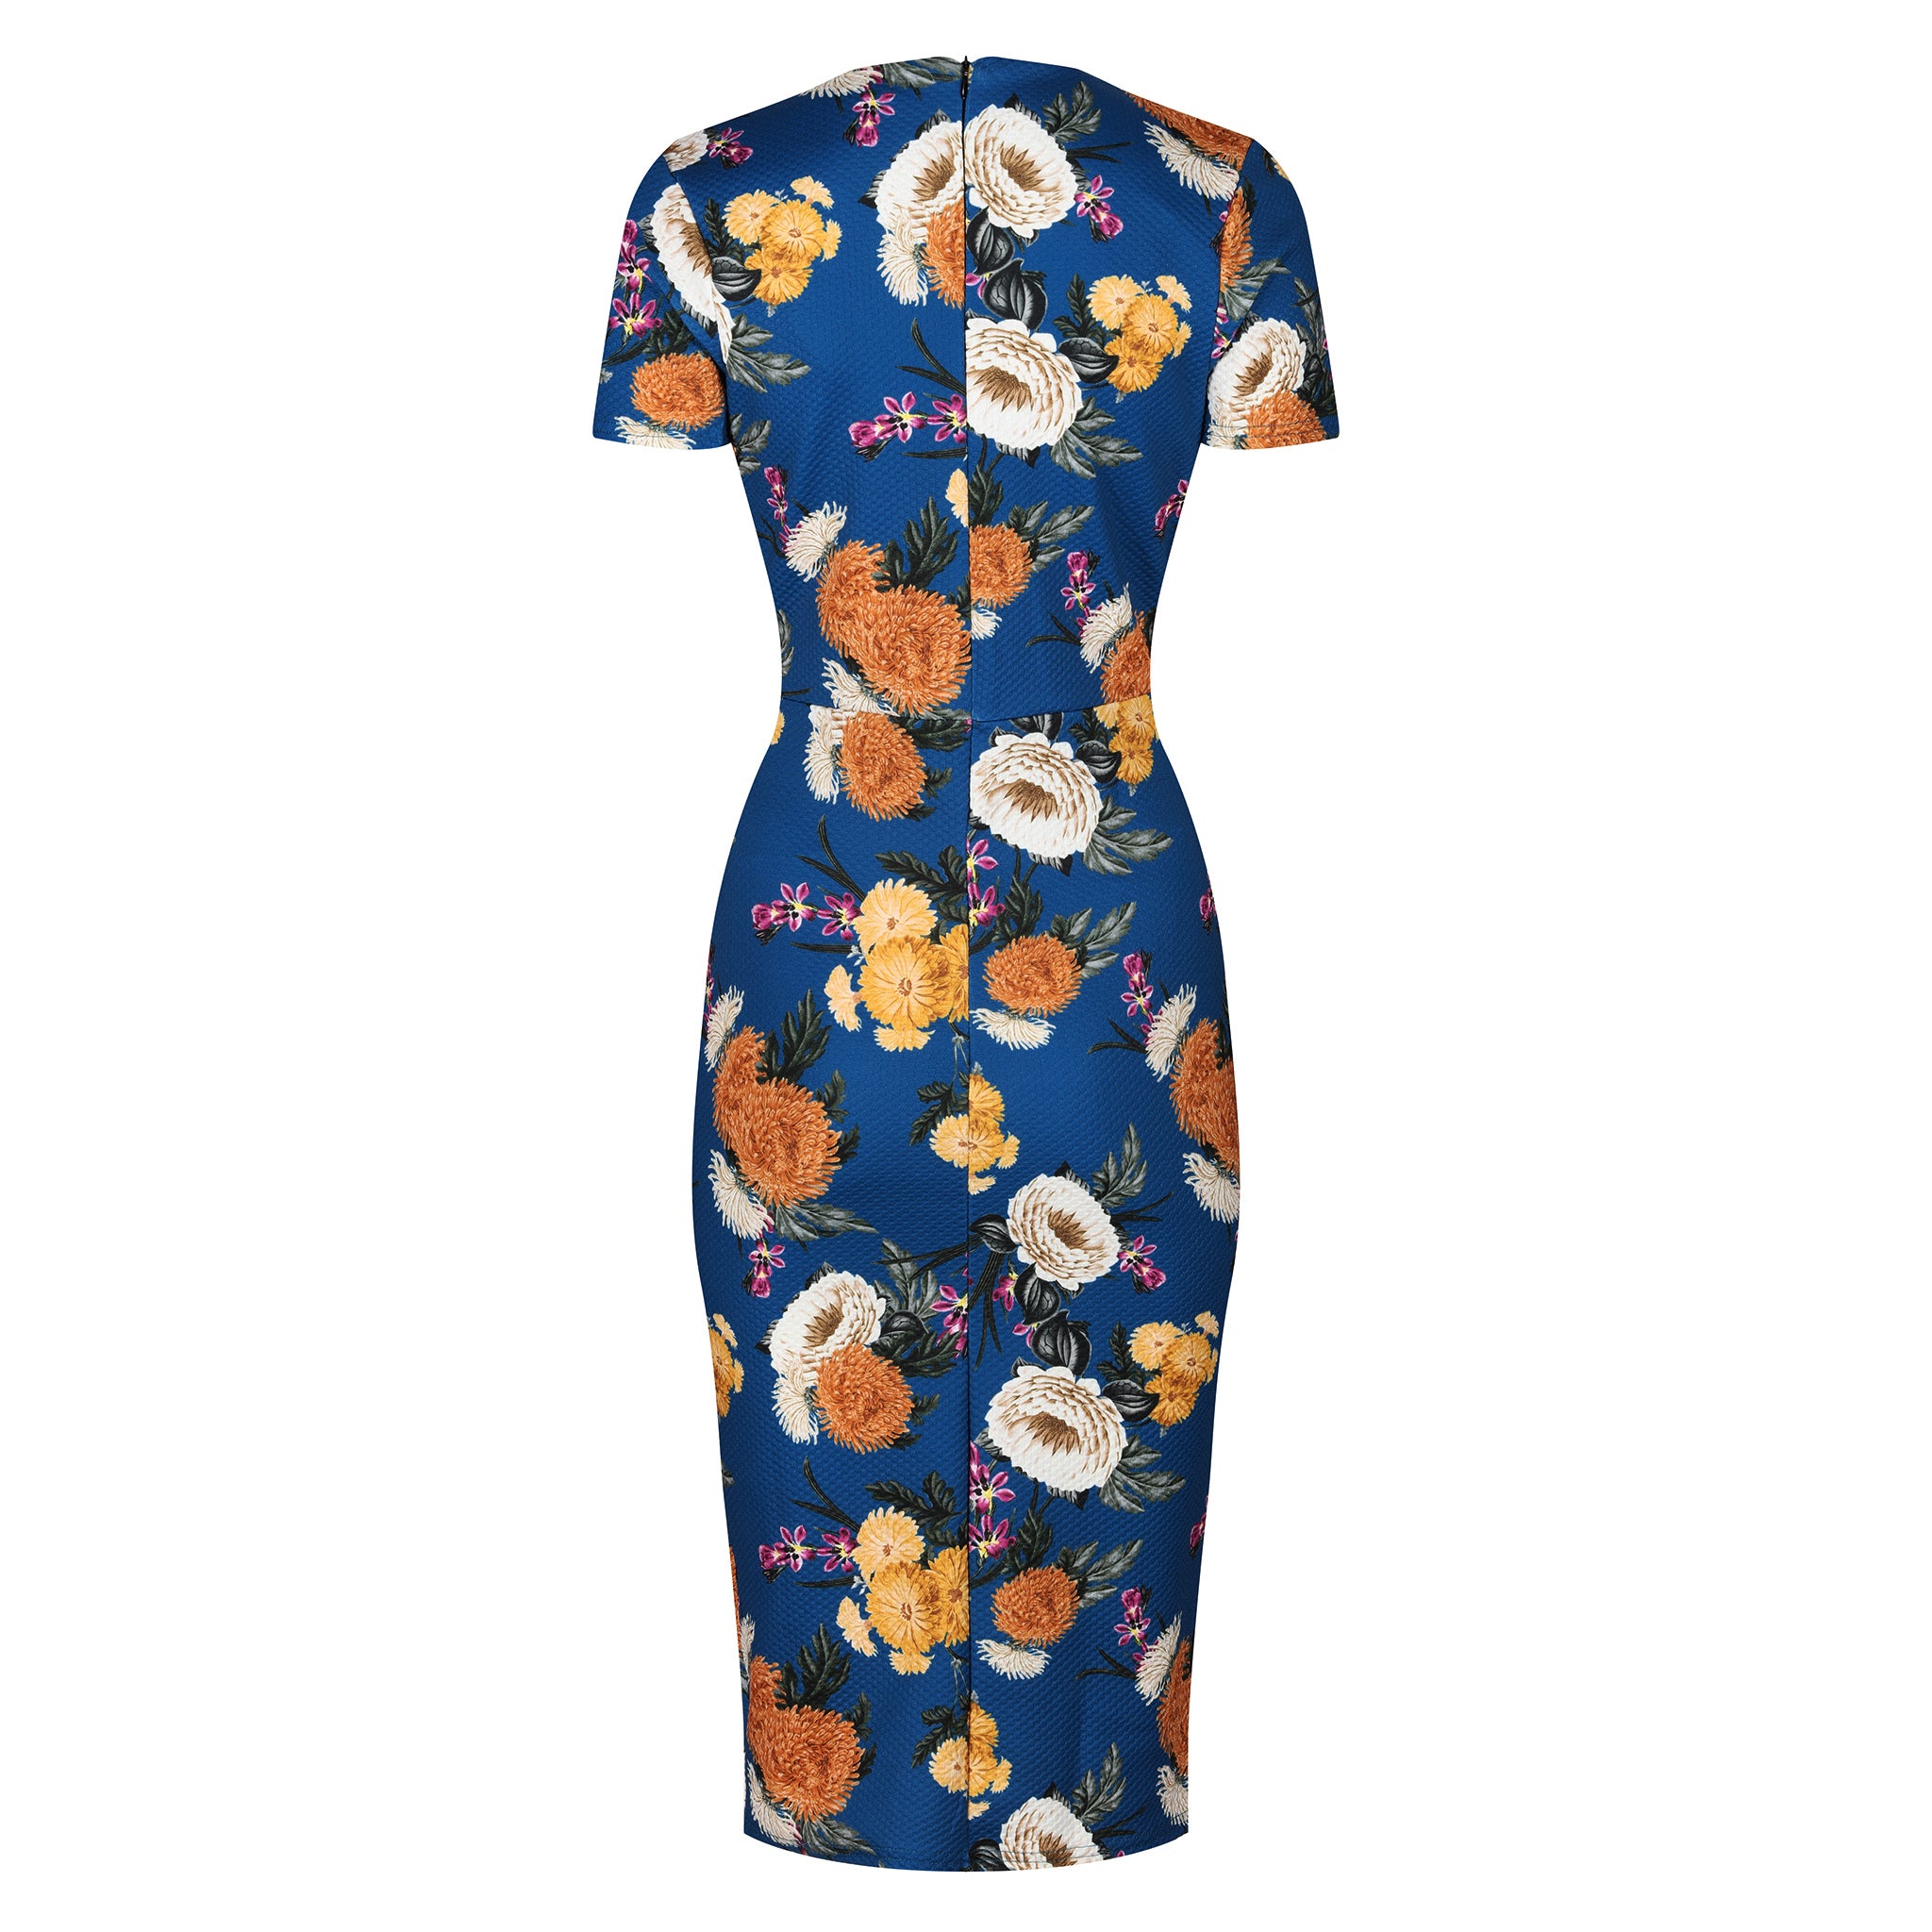 Blue Floral Print Jacquard Pencil Dress With Cap Sleeves & Empire Waist